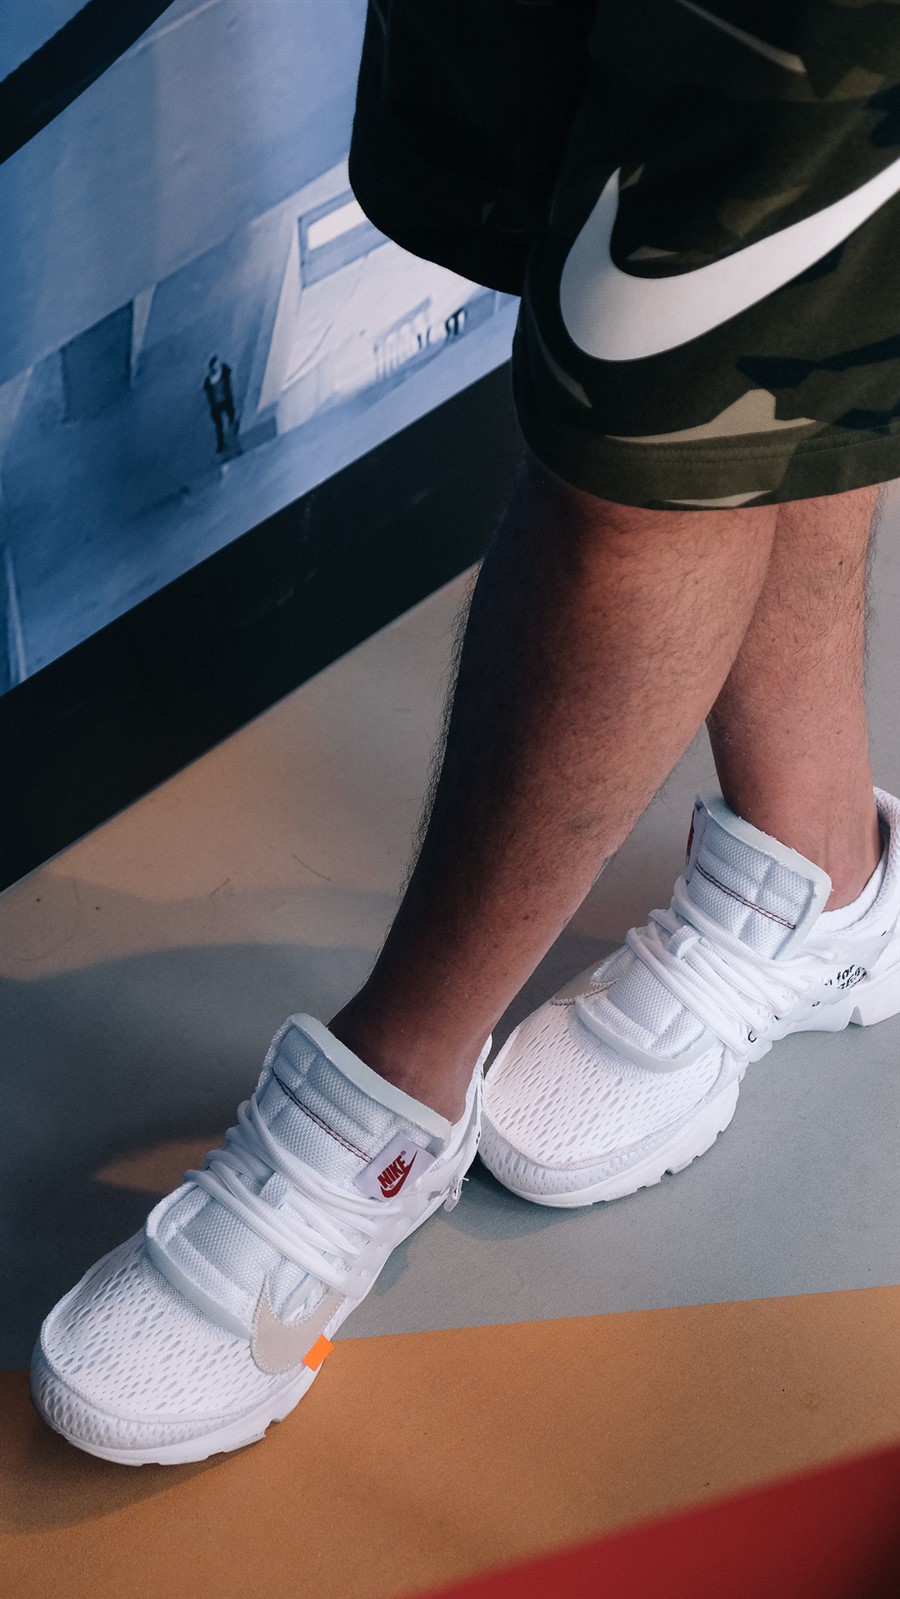 Fabien in his Nike Air Presto x Off-White sneakers in white